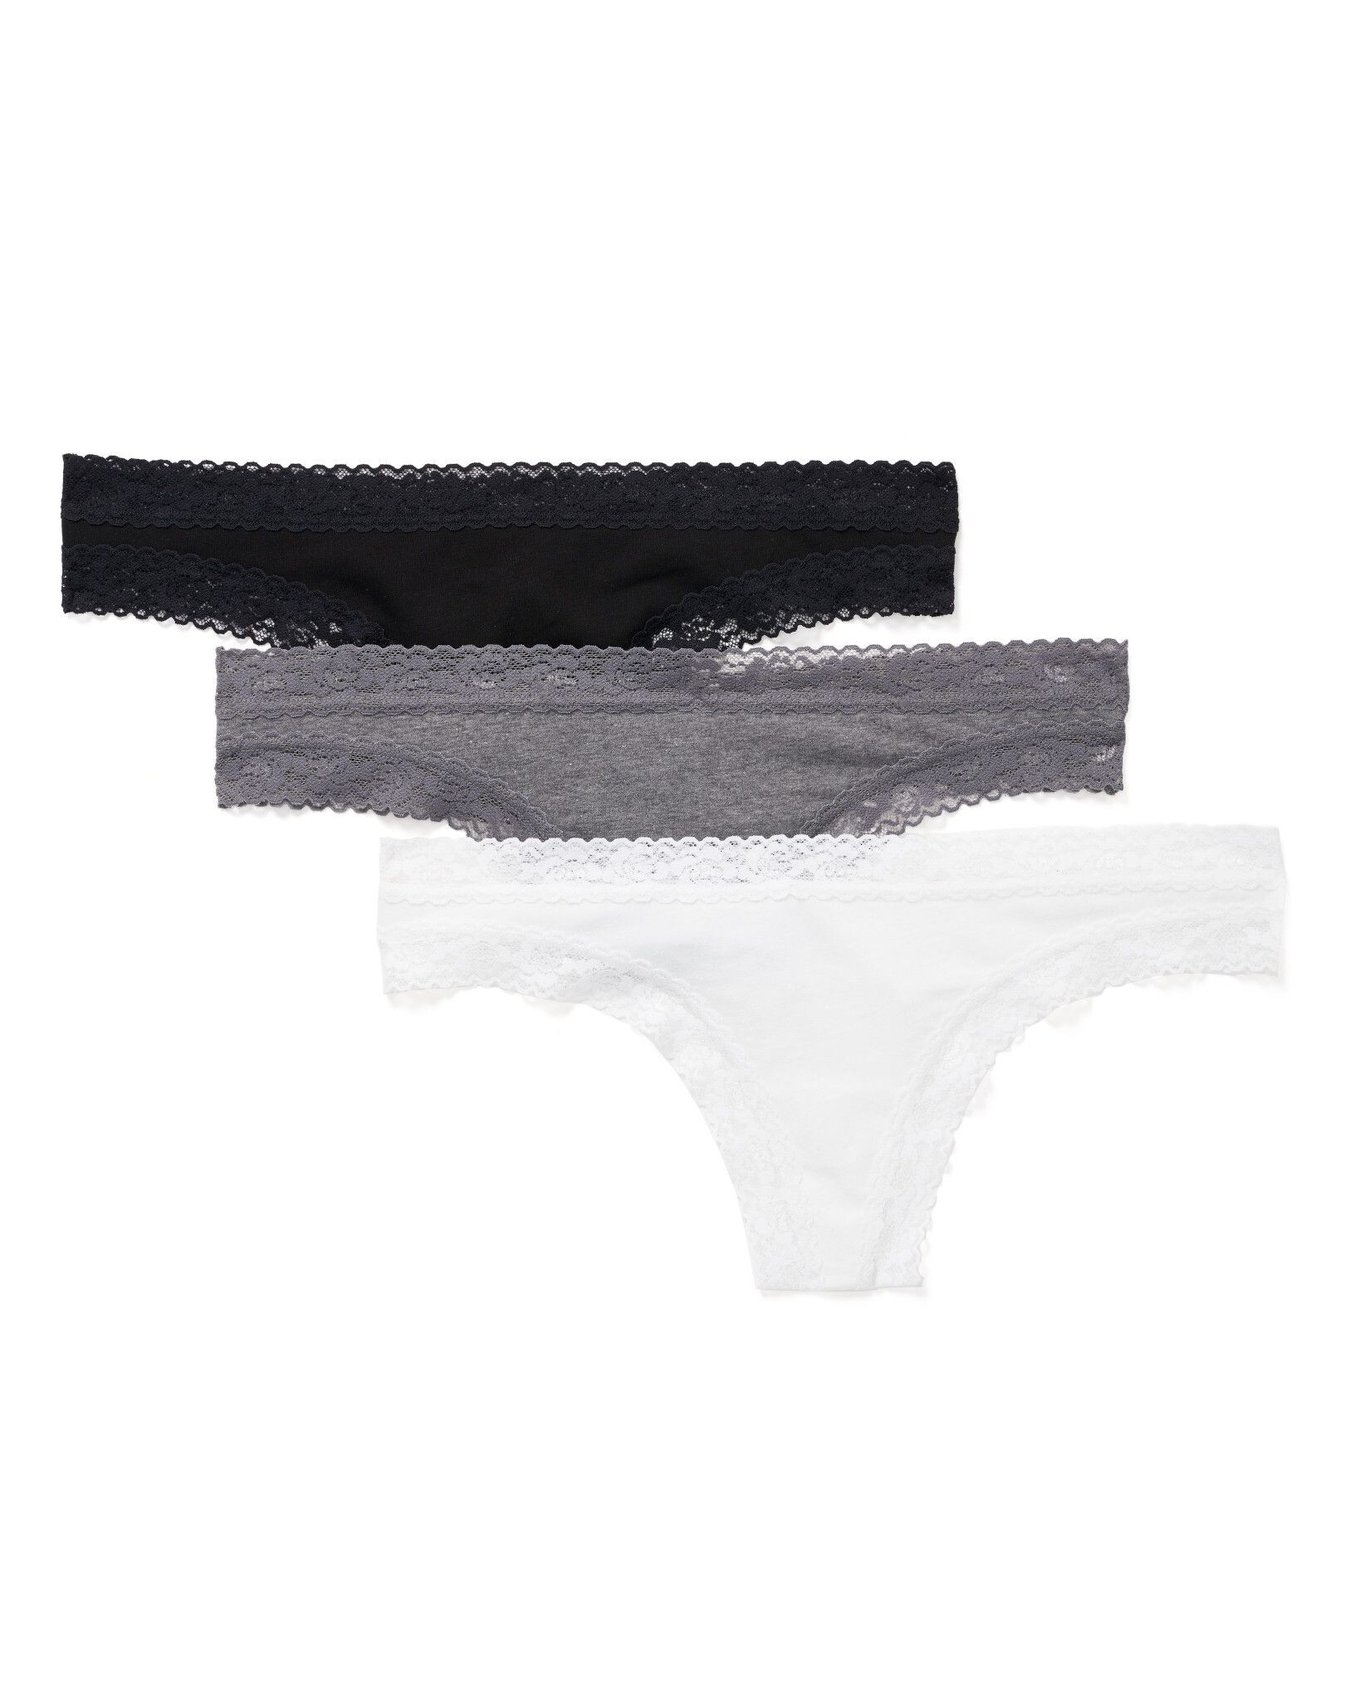 Nylon 90% + Spandex 10% Y-Thong G-String Underwear at Rs 399/piece